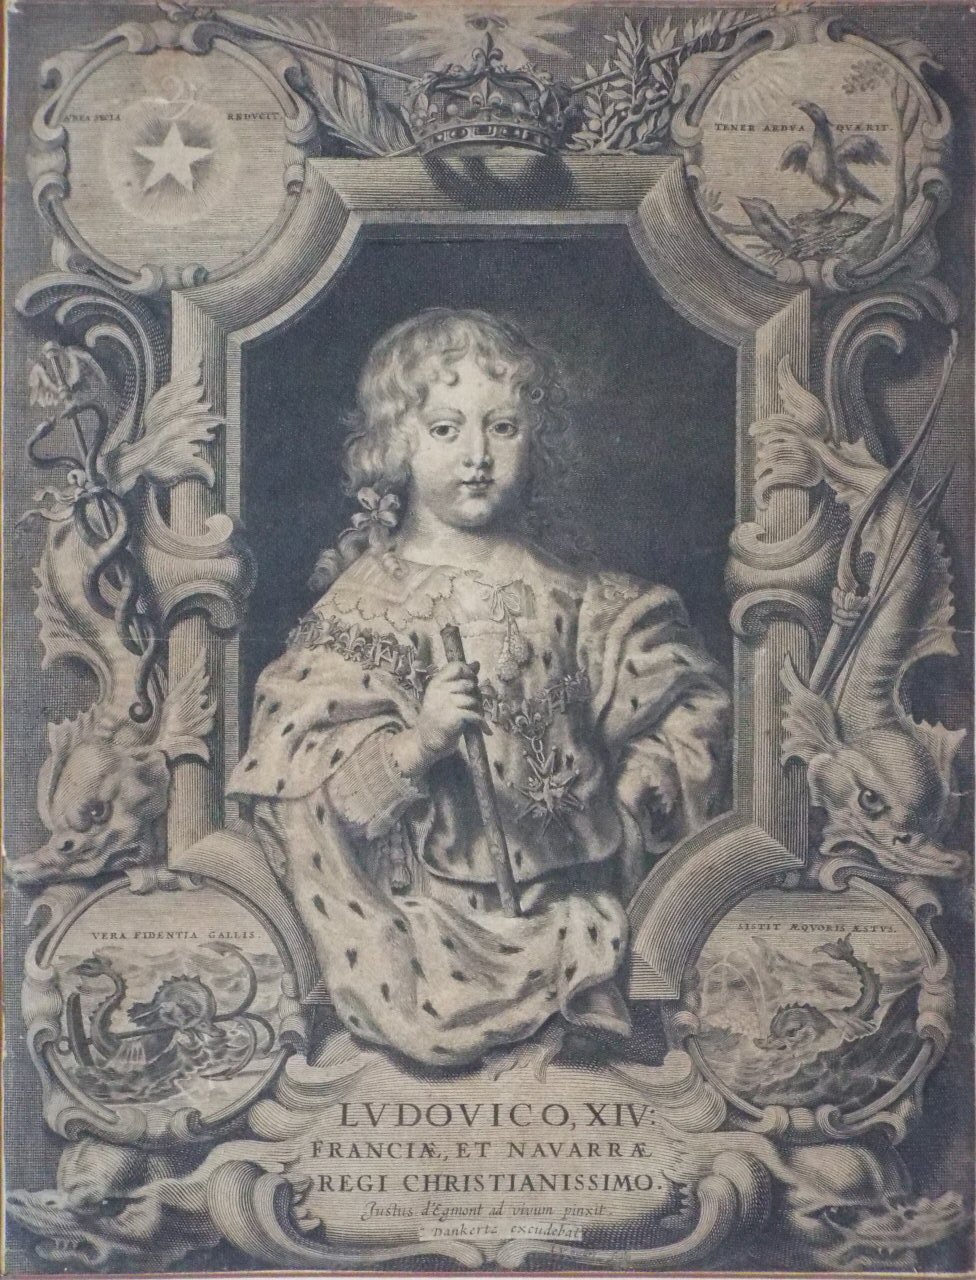 Print - Ludovico, XIV: Fraciae, et Navarrae Regi Christianissimo. - Dankerts